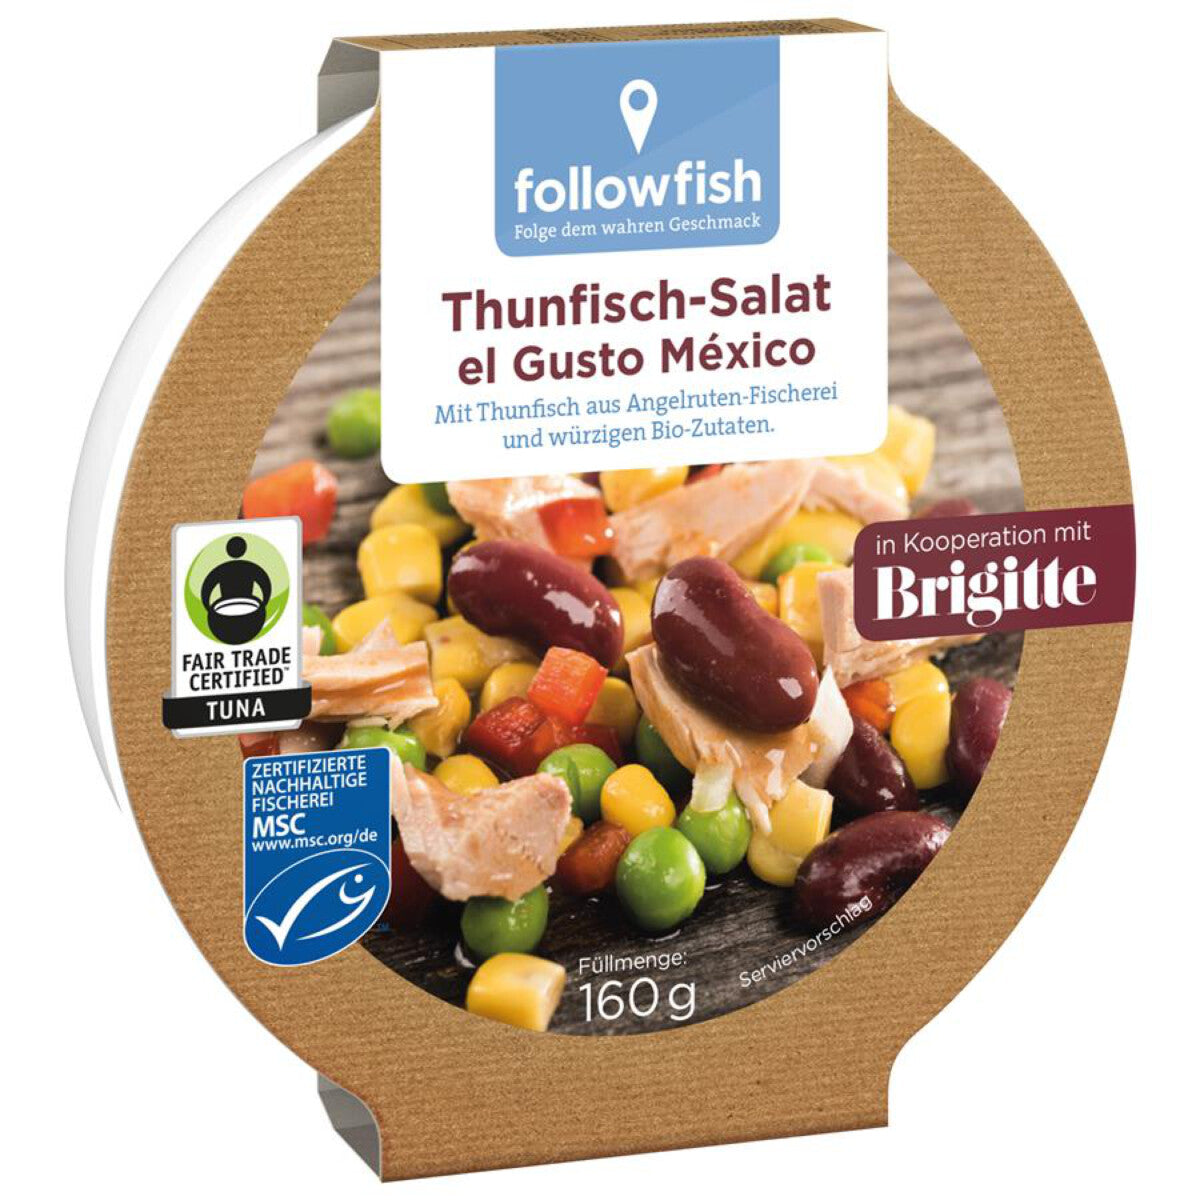 FOLLOWFISH Thunfisch-Salat el Gusto Mexico - 160 g